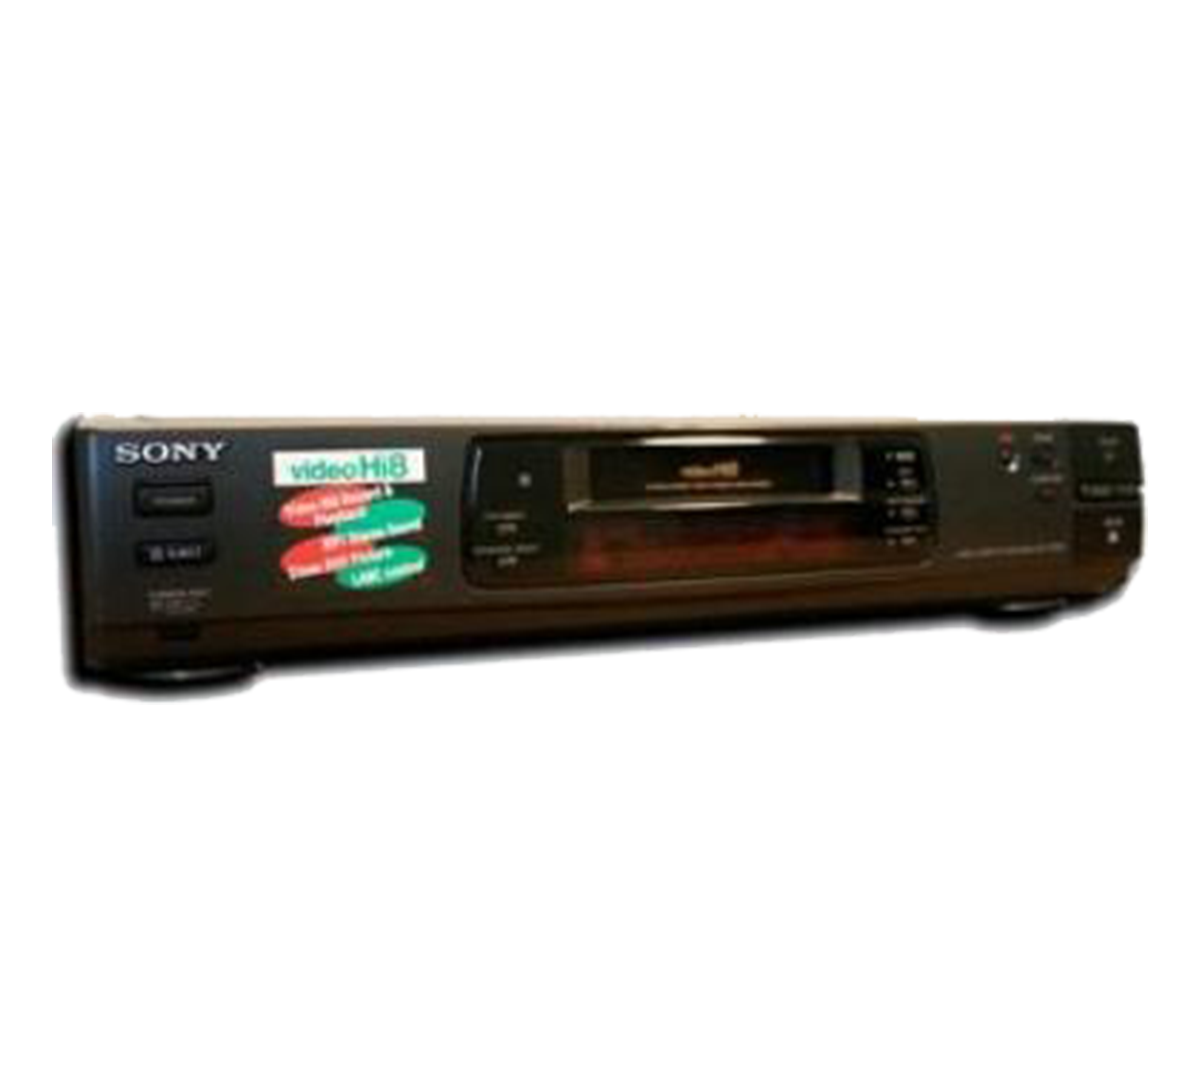 Sony EV-PR2 Slim Hi8 Video8 8mm Player Recorder HiFi Stereo VCR Deck ~  EV-C200